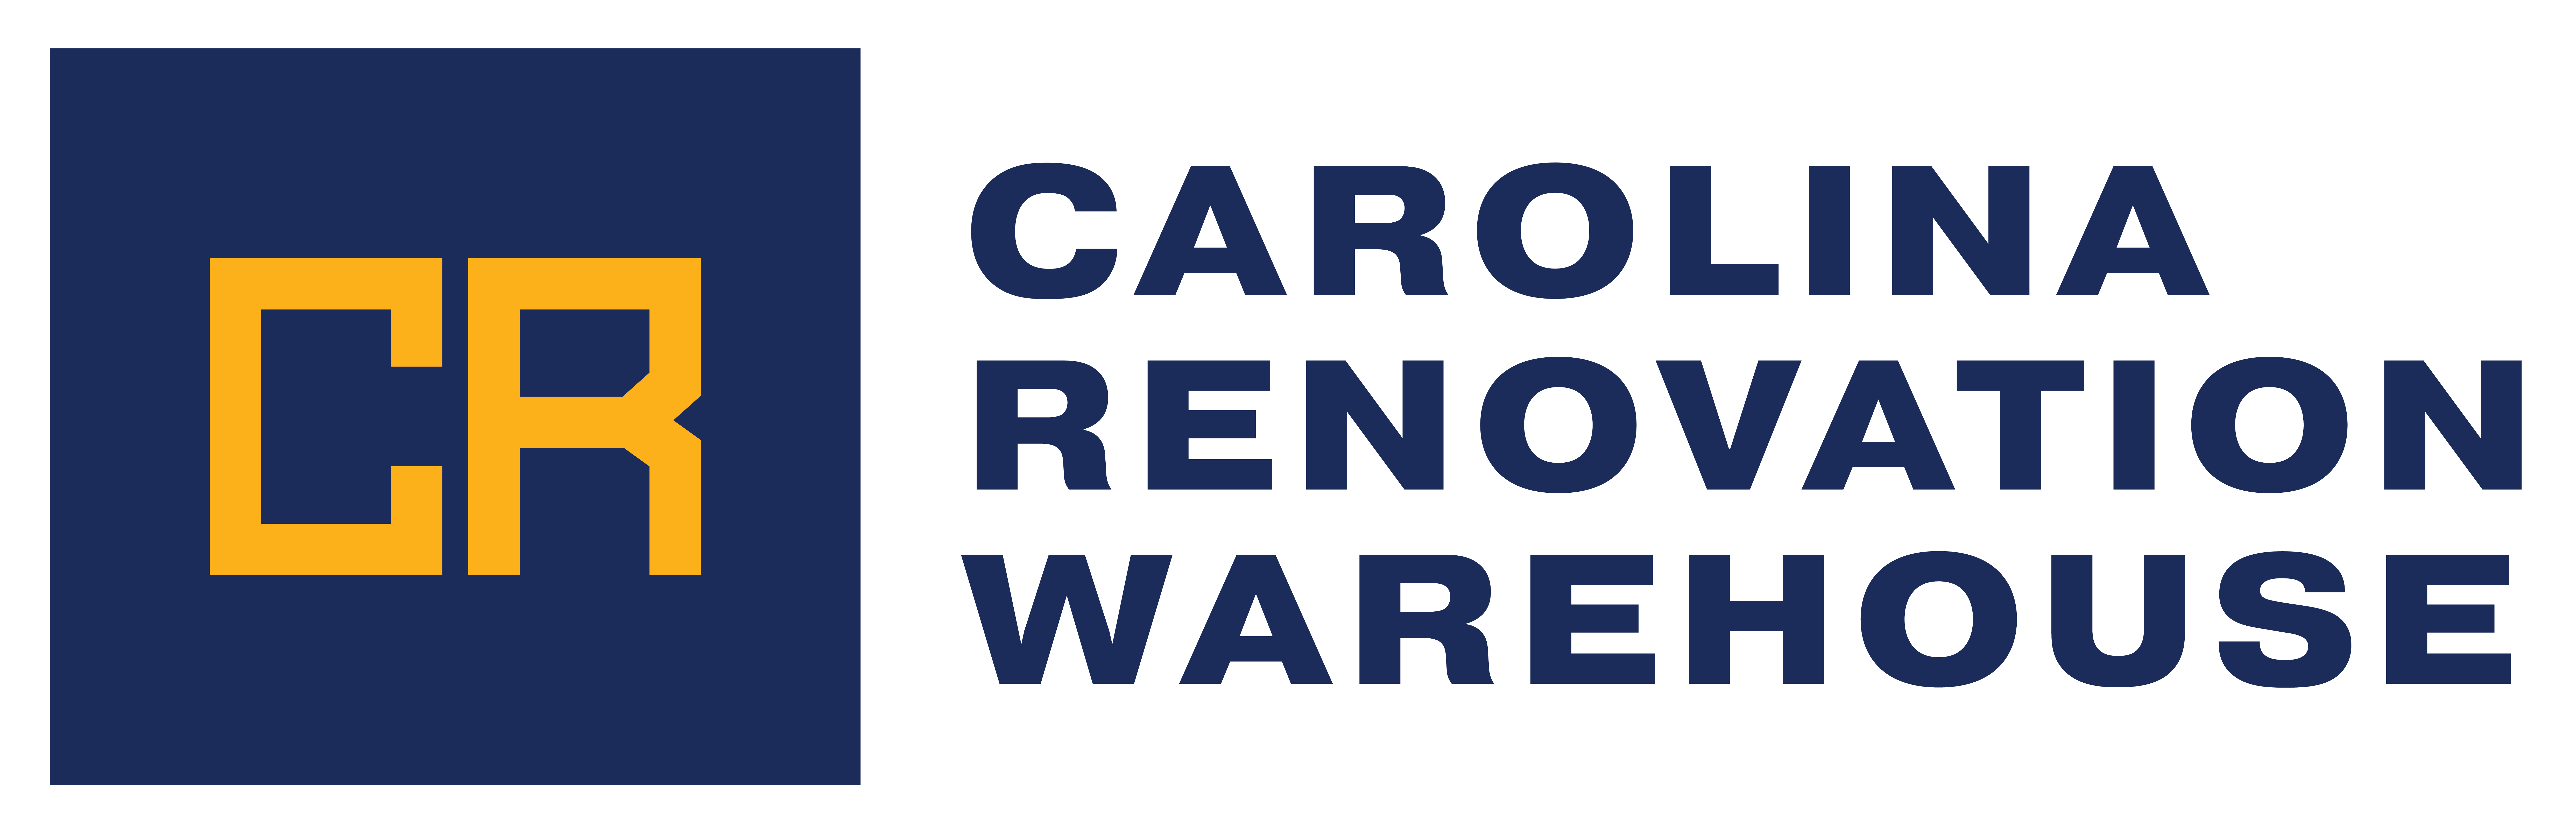 Carolina Renovation Warehouse_Websize